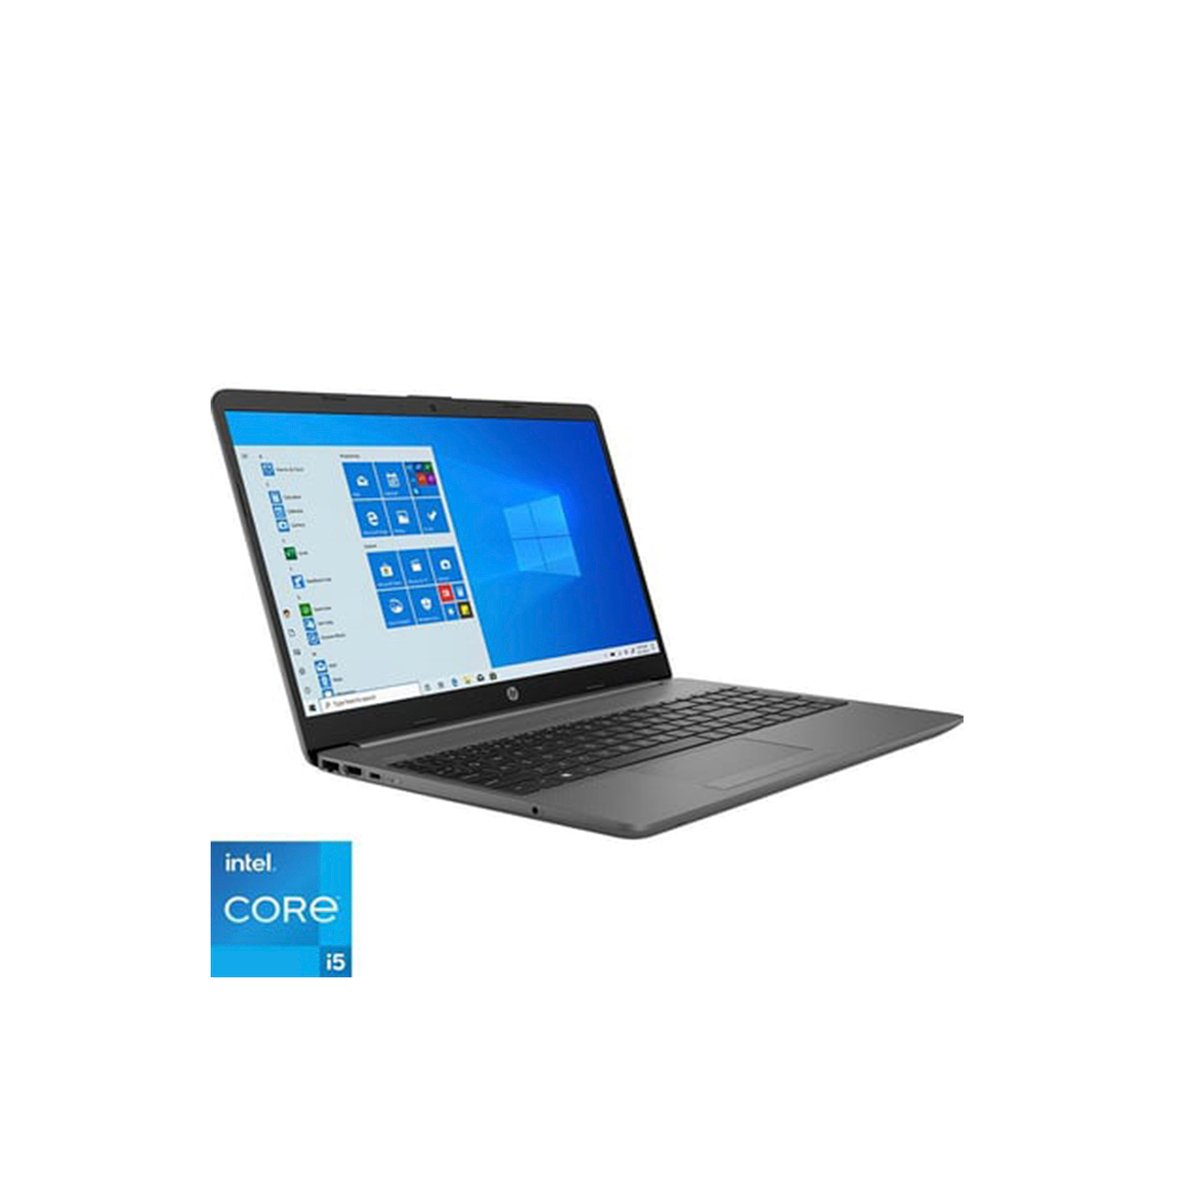 HP Laptop 15-DW3012NX, 15.6 inches, 11th Gen Intel Core i5-1135G7 Processor, 8GB RAM, 1TB HDD, NVIDIA GeForce MX350, Chalkboard Gray